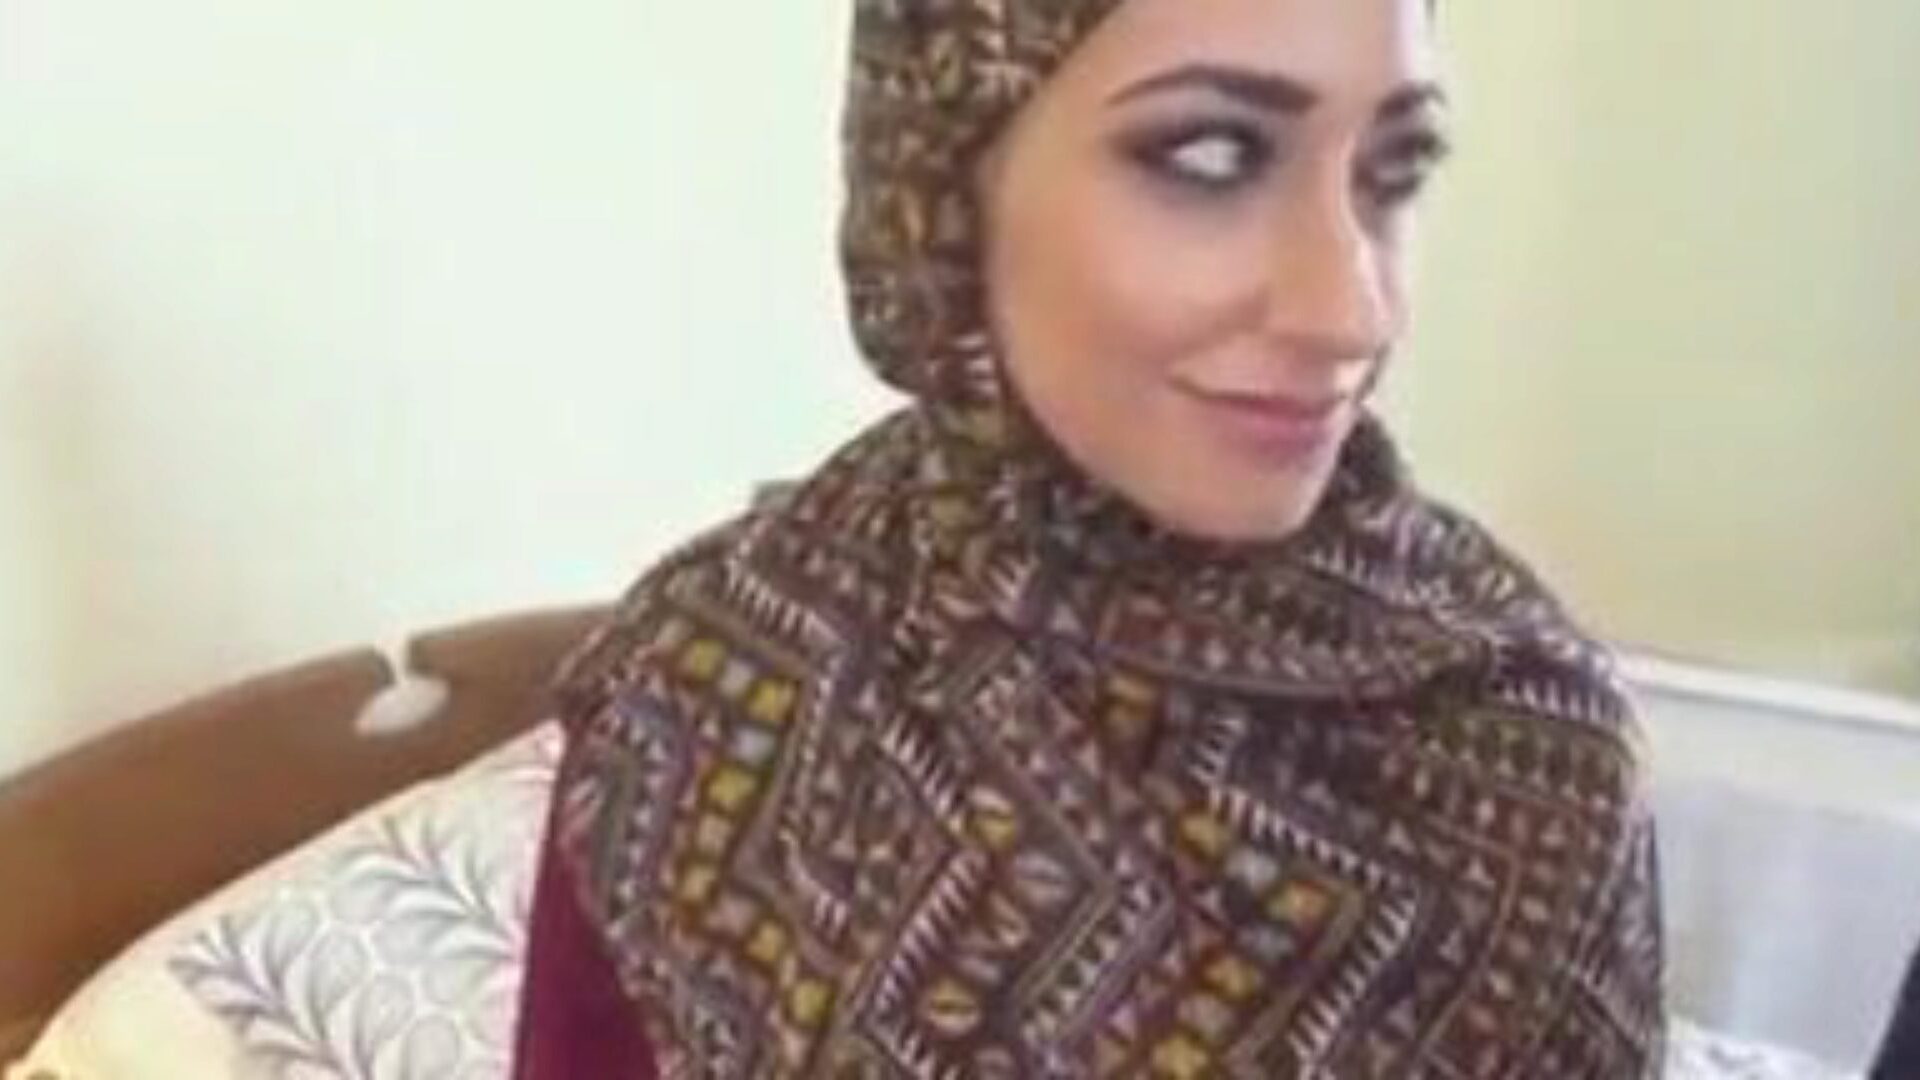 putain de fille musulmane hijab, vidéo porno tube musulman gratuit regarder une scène de film de fille hijab musulmane baise sur xhamster, la plus grande page Web de tube de baise avec des tonnes de tube musulman arabe gratuit et de vidéos porno hijab youtube